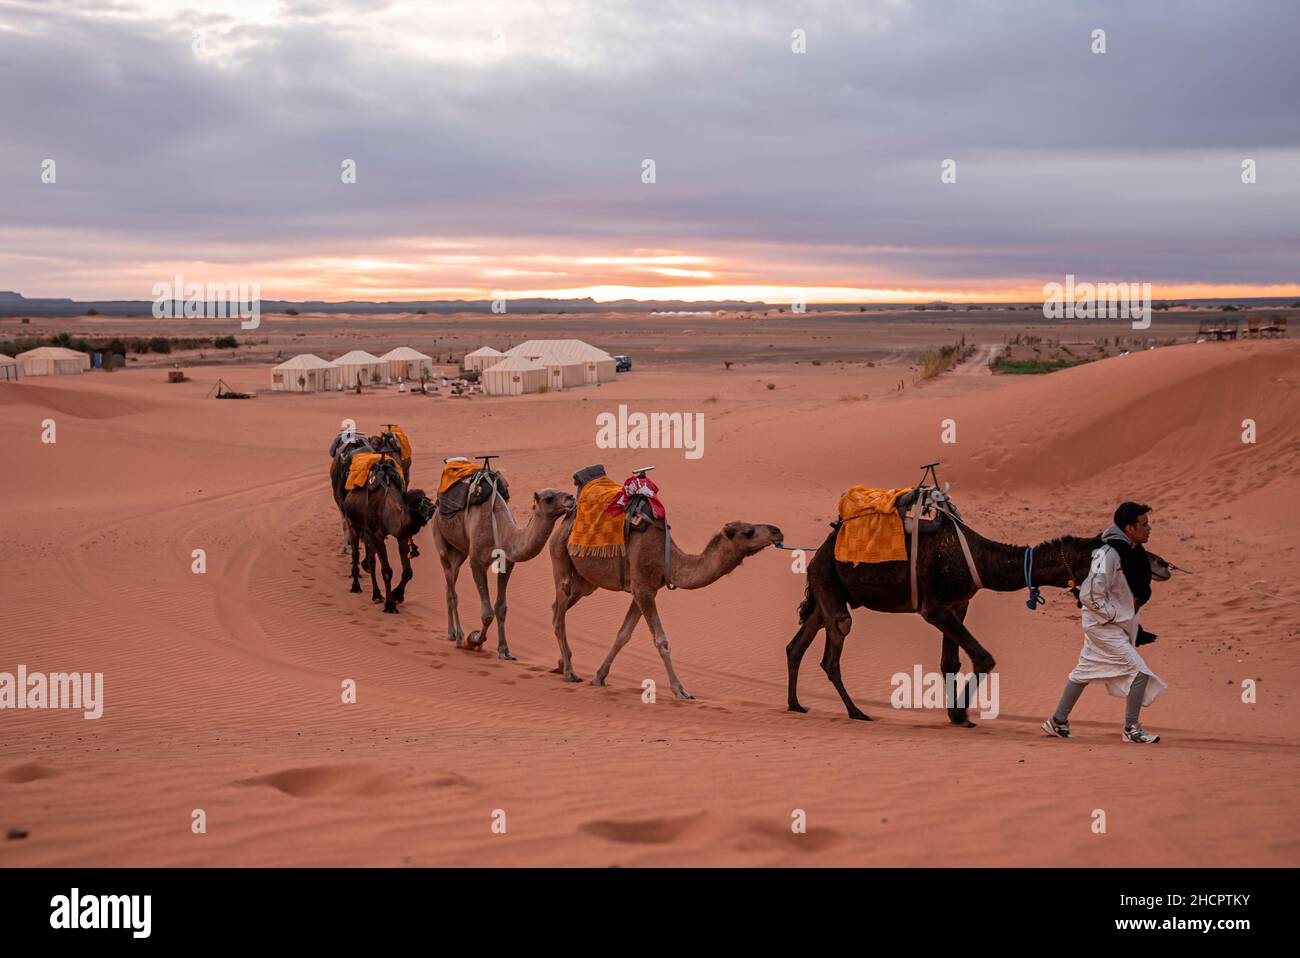 Bedouin leads caravan of camels through the sand dune in desert Stock Photo